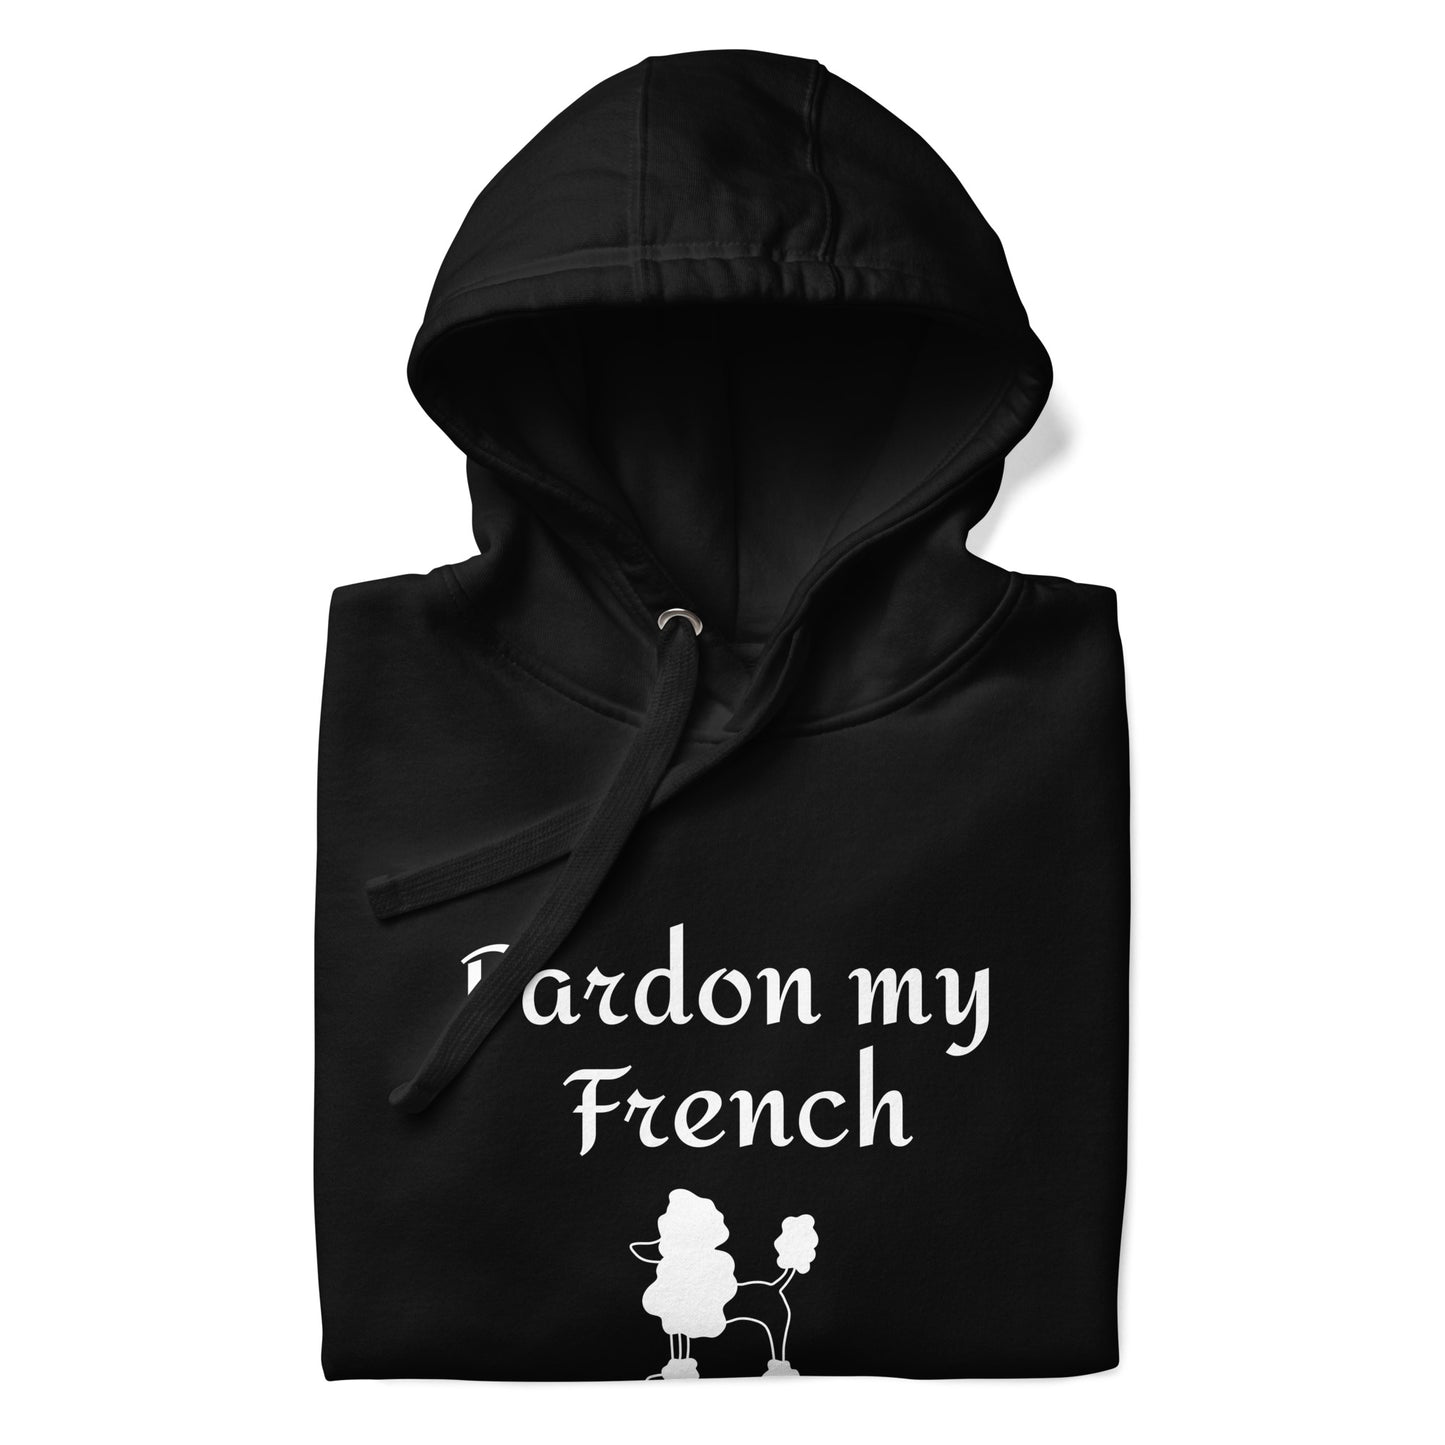 Pardon my French - Hoodie